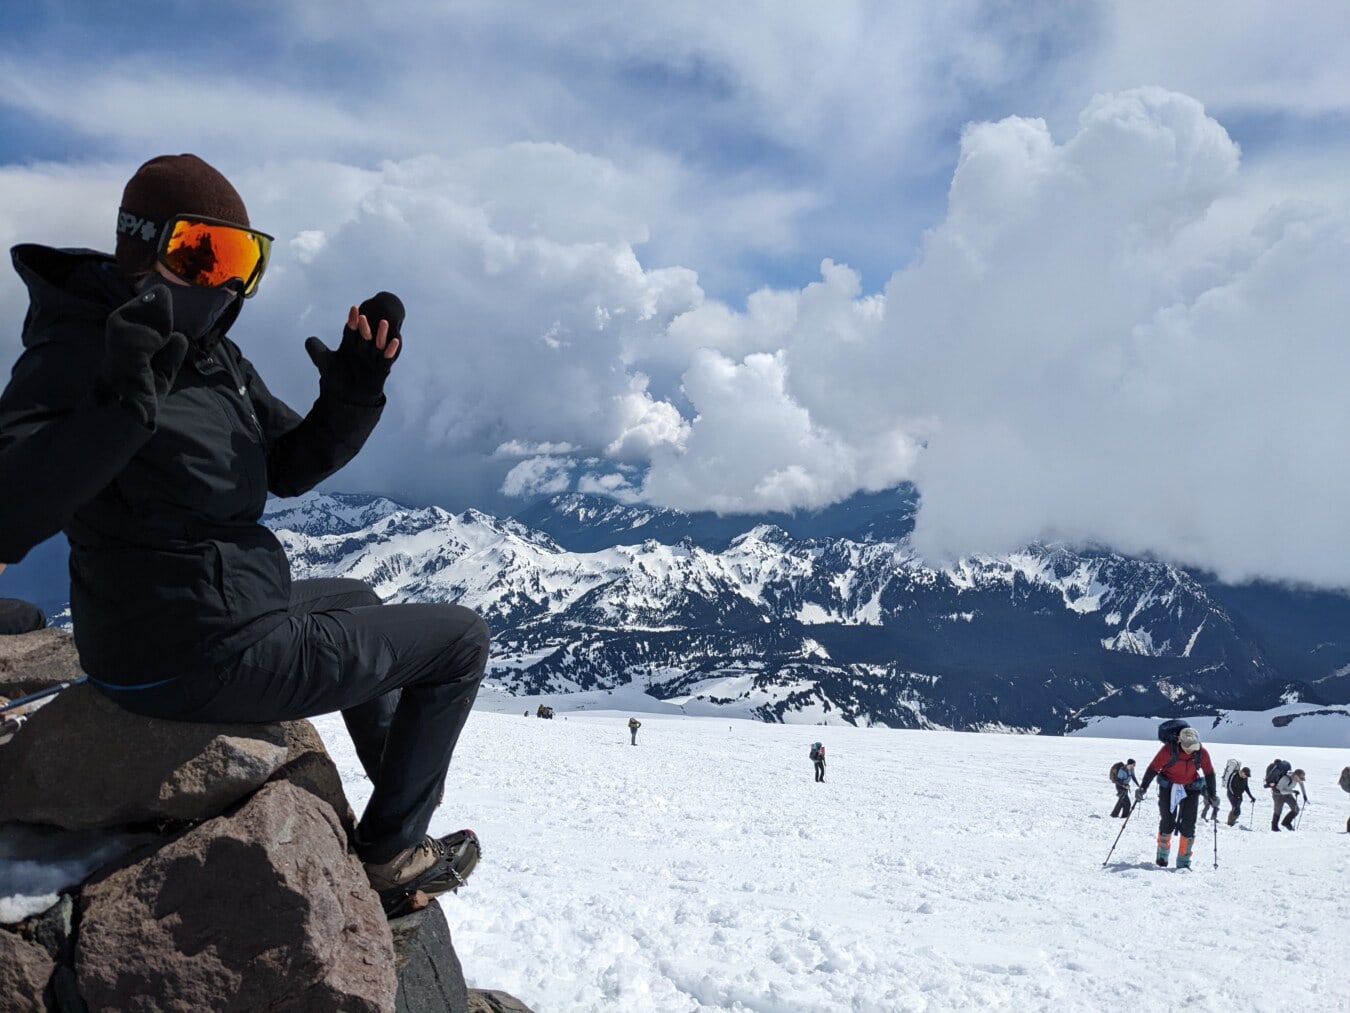 skiing, skier, winter, people, recreation, cold, snow, sport, mountain, adventure